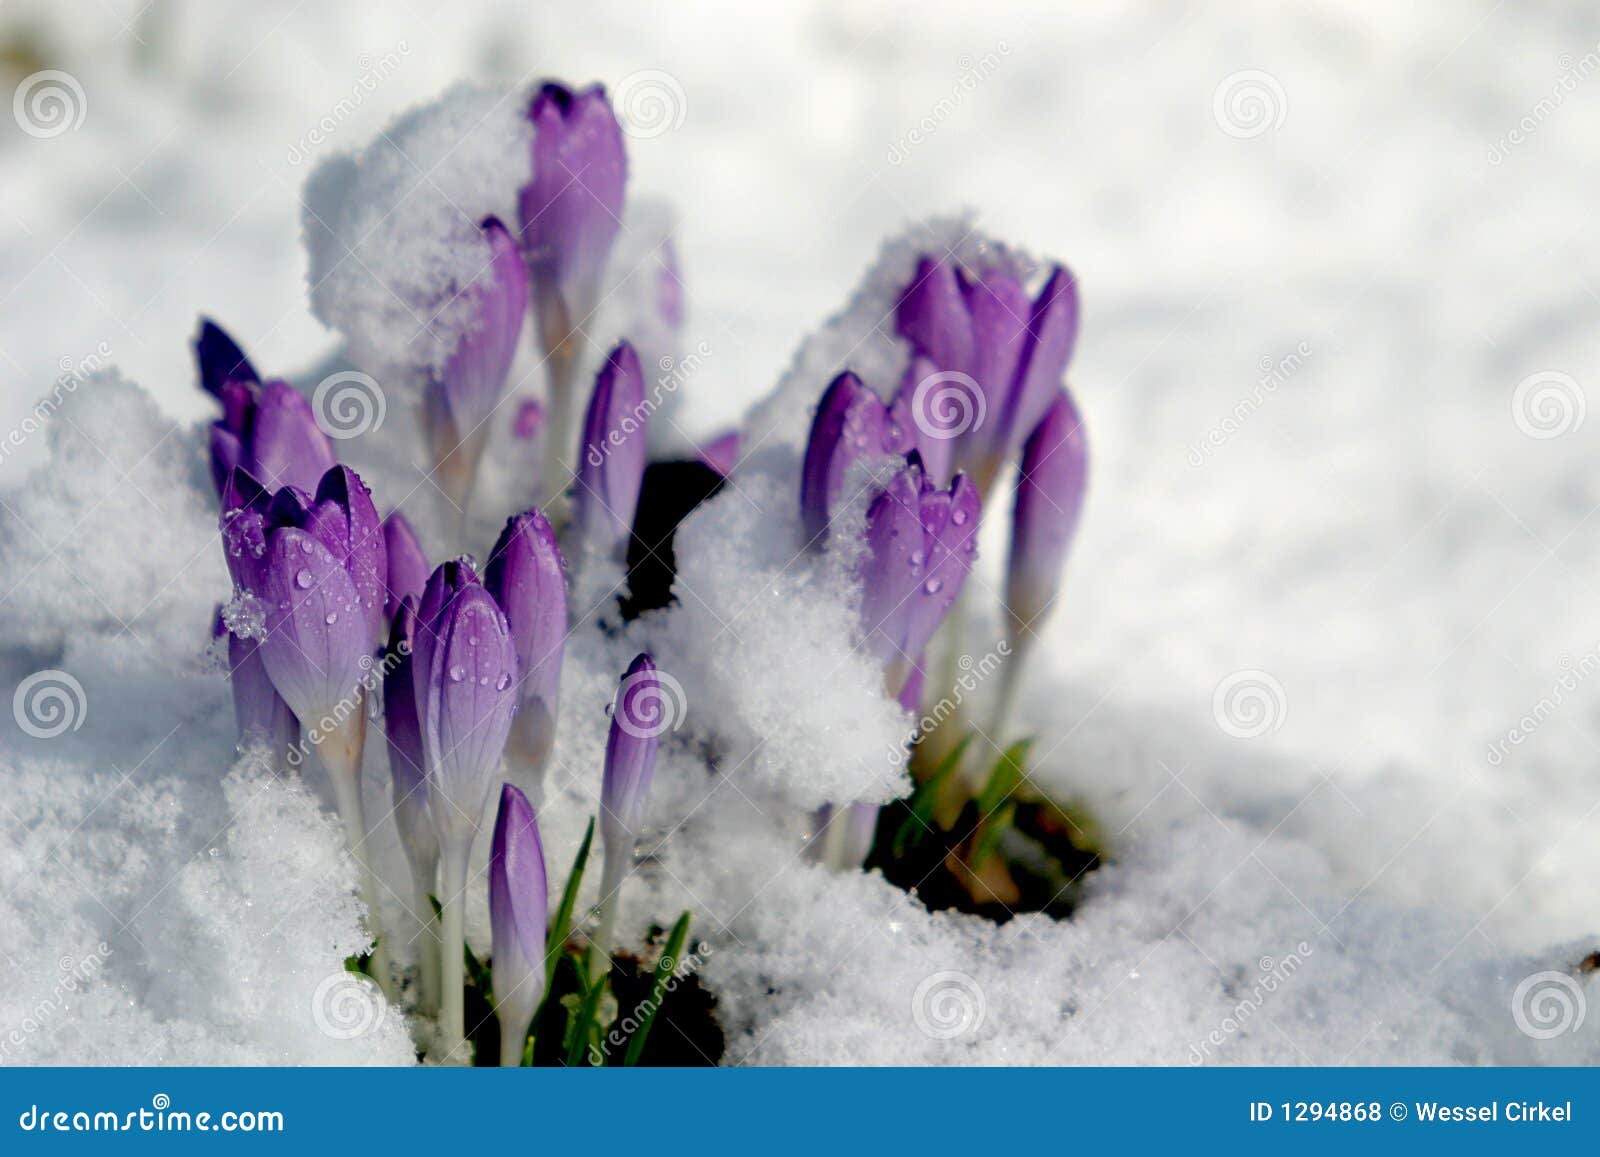 crocus in the snow (spring)